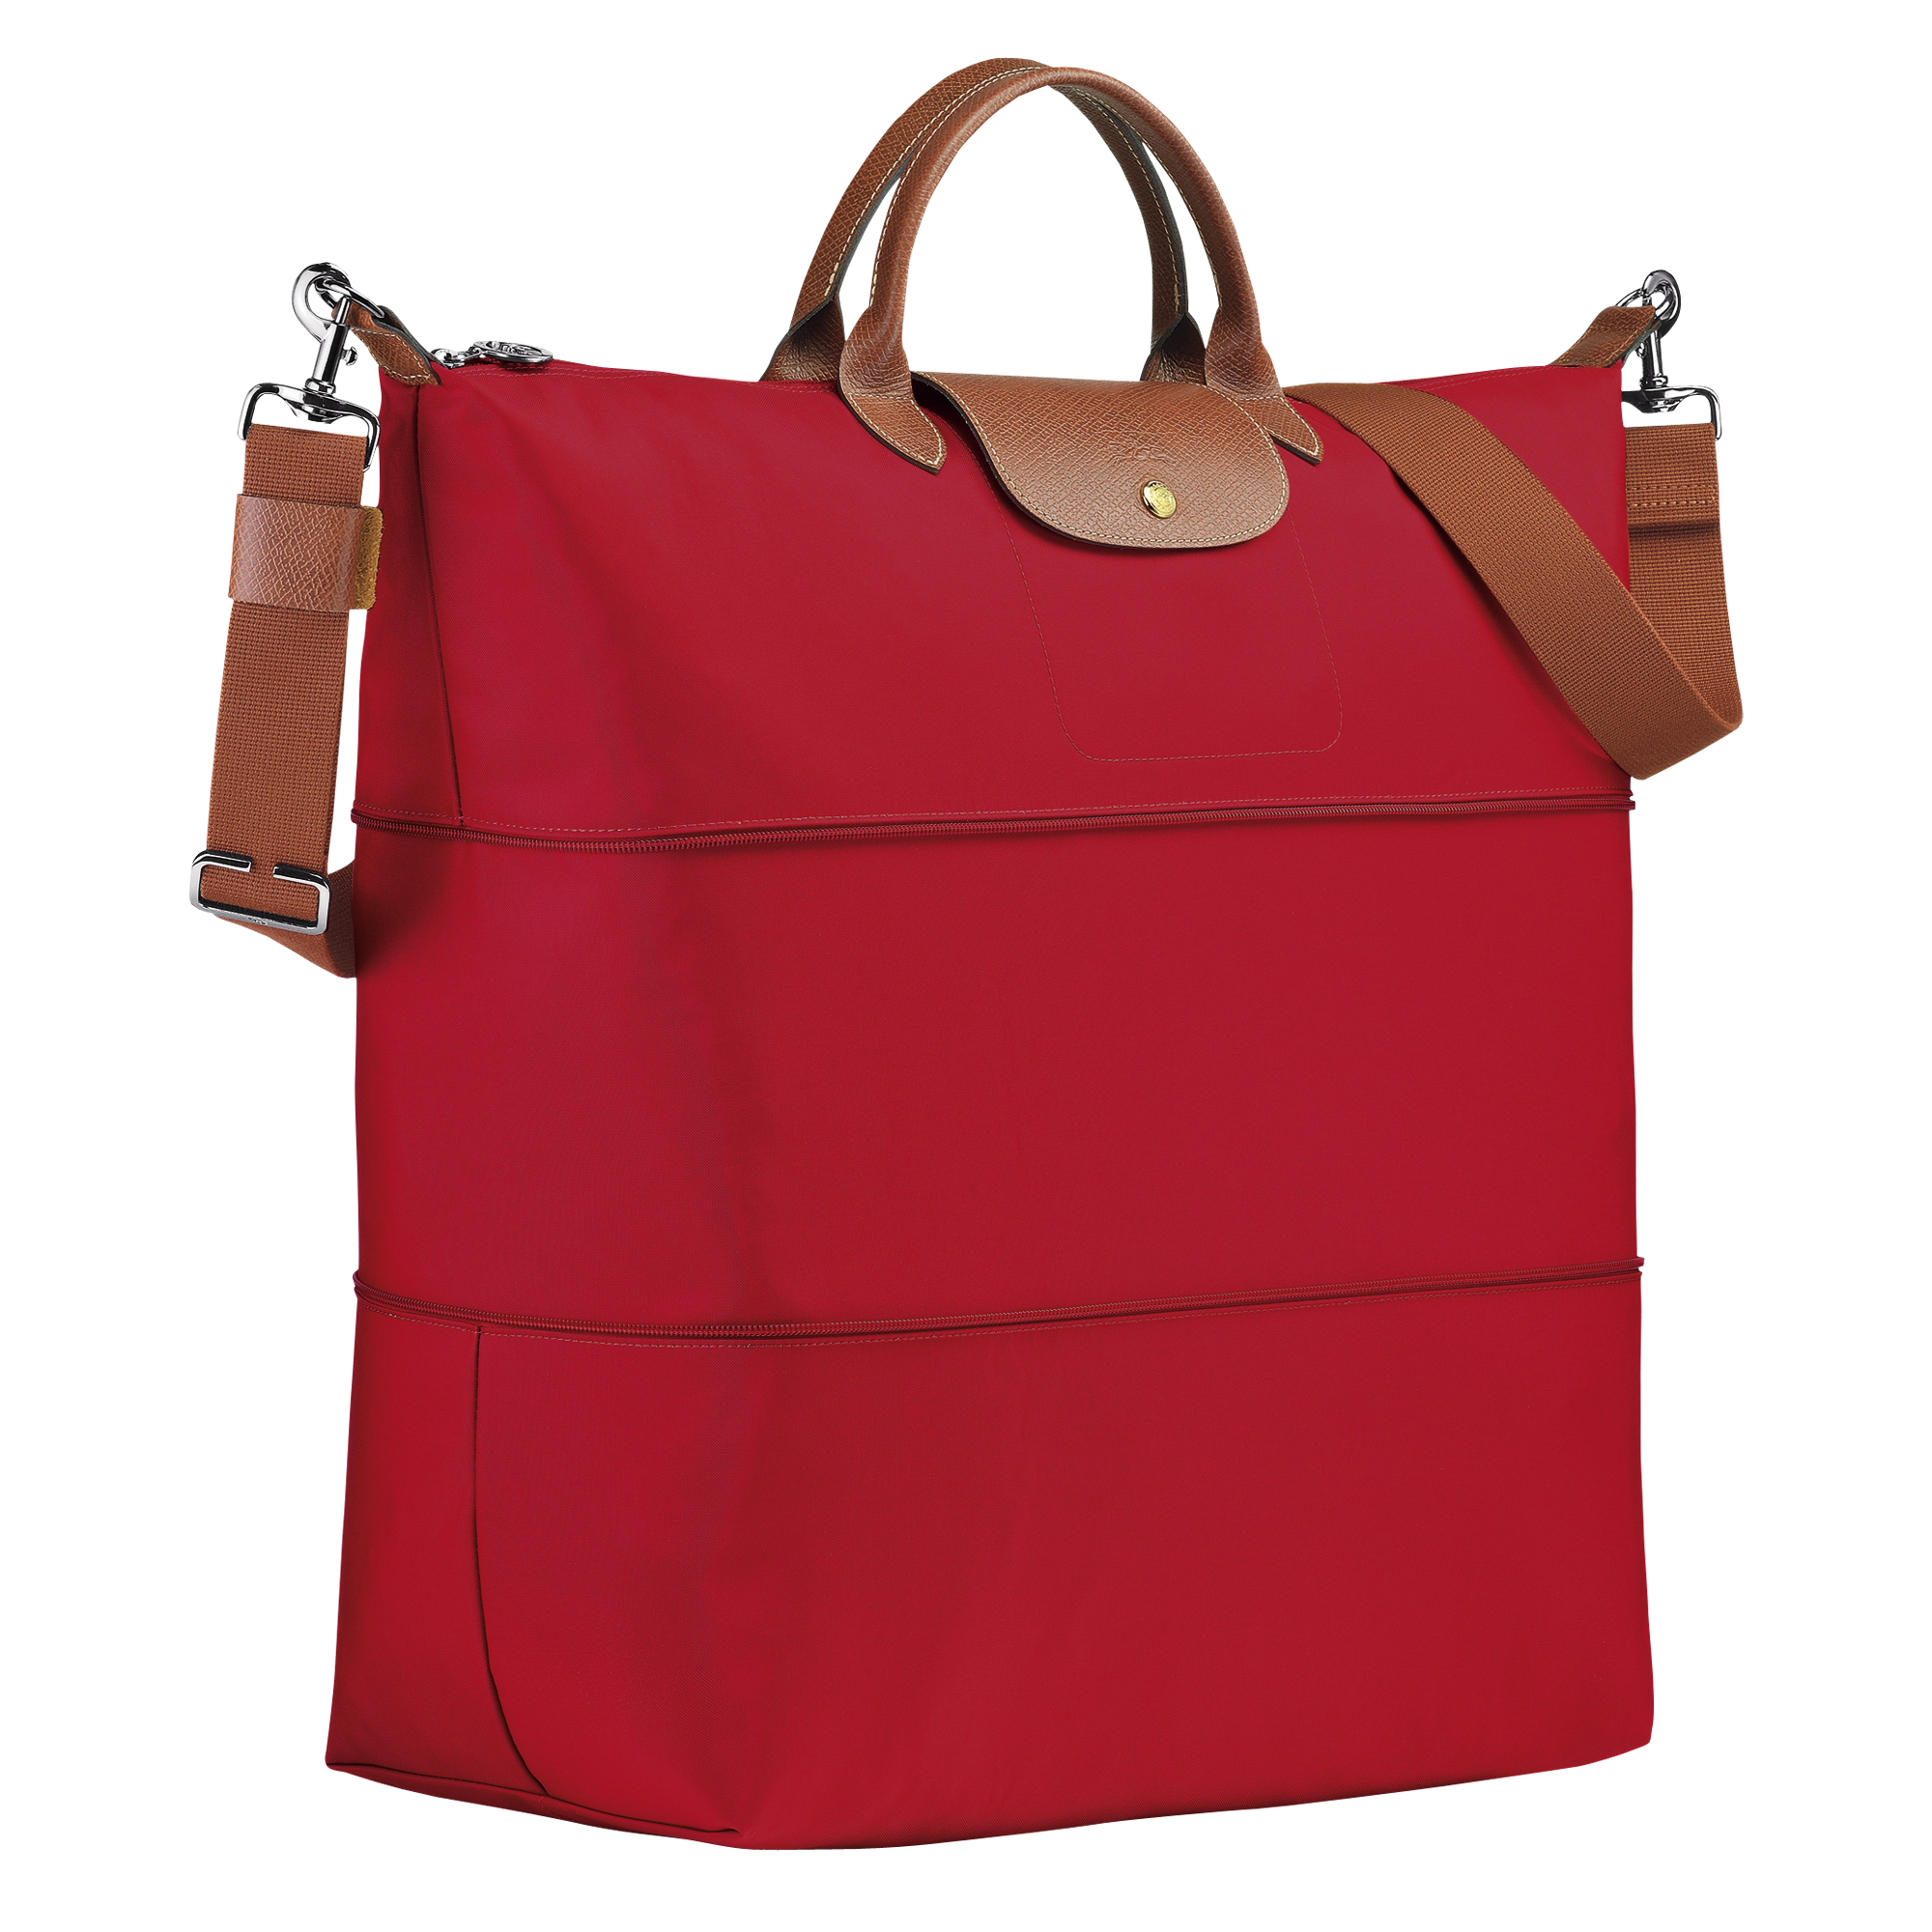 longchamp bag red